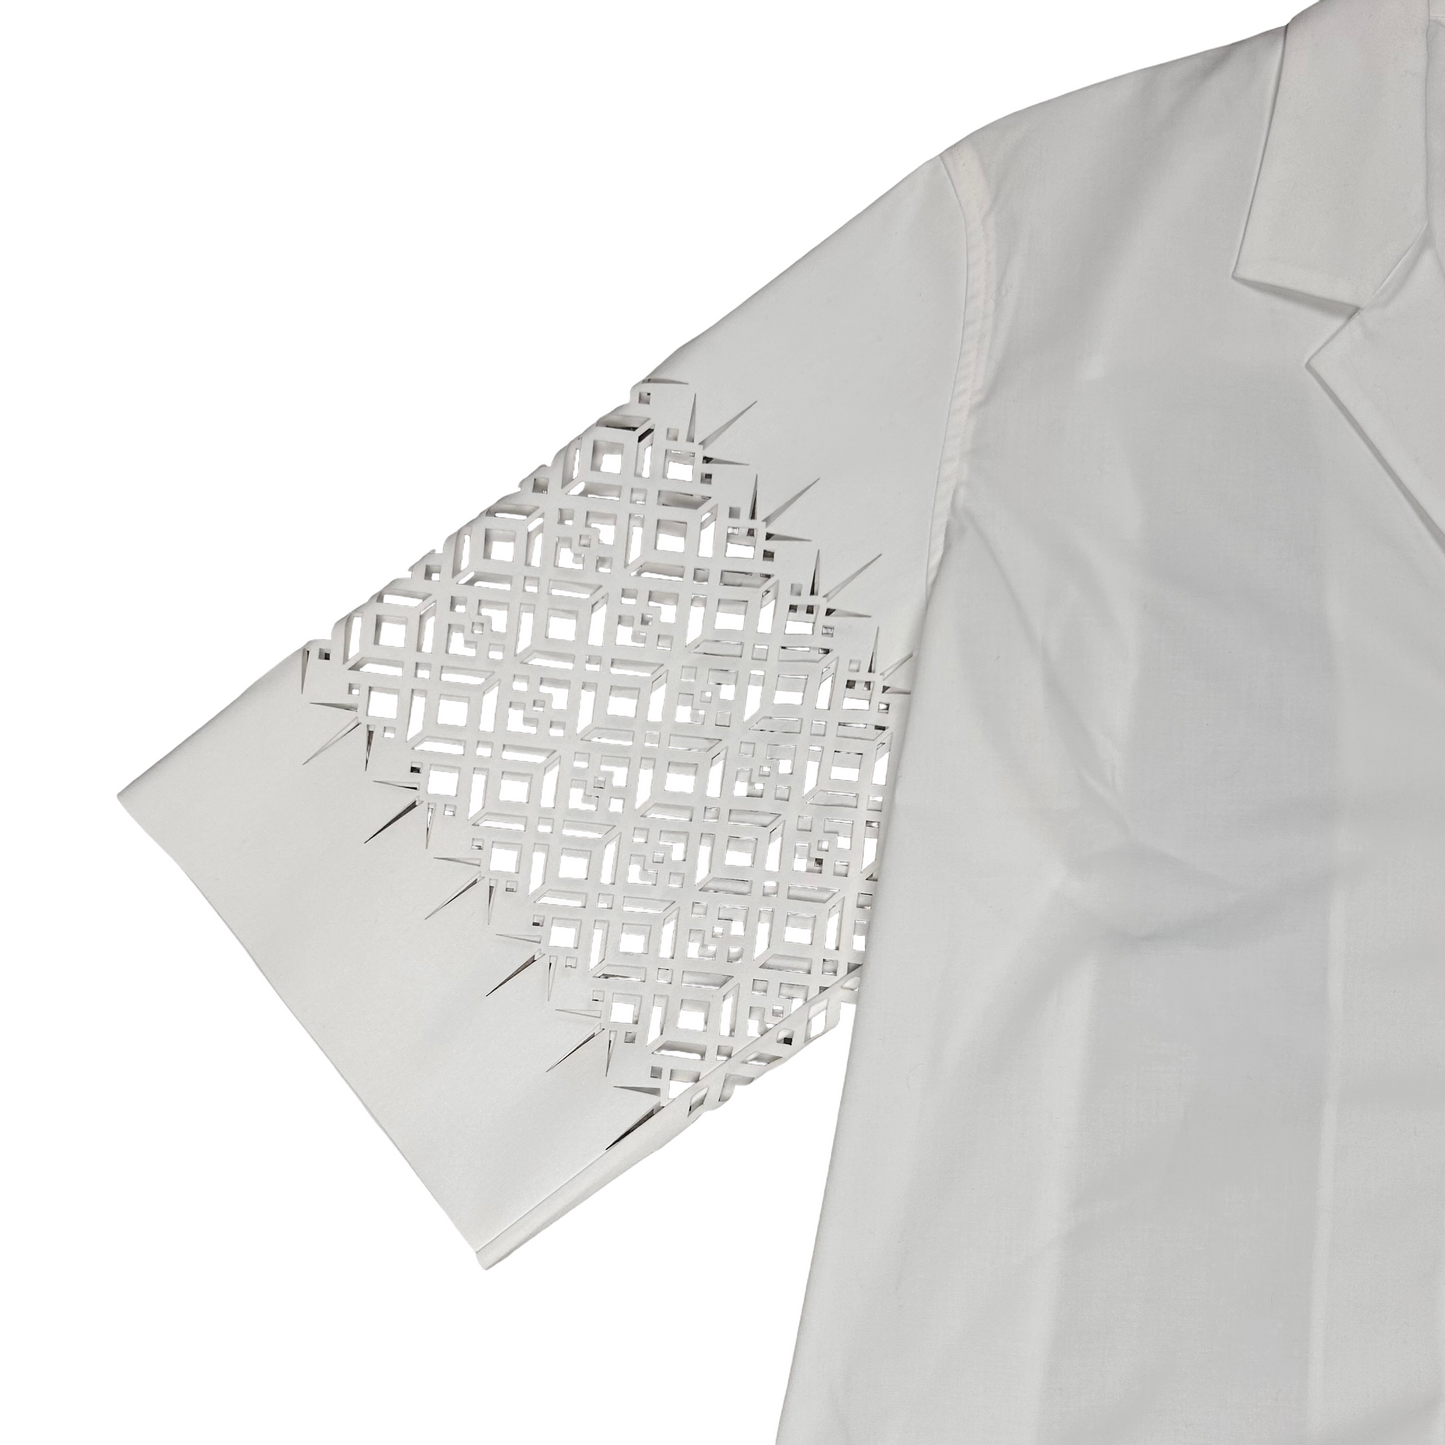 Haider Ackermann Cropped Laser Cut Short Sleeve Shirt White - SS19